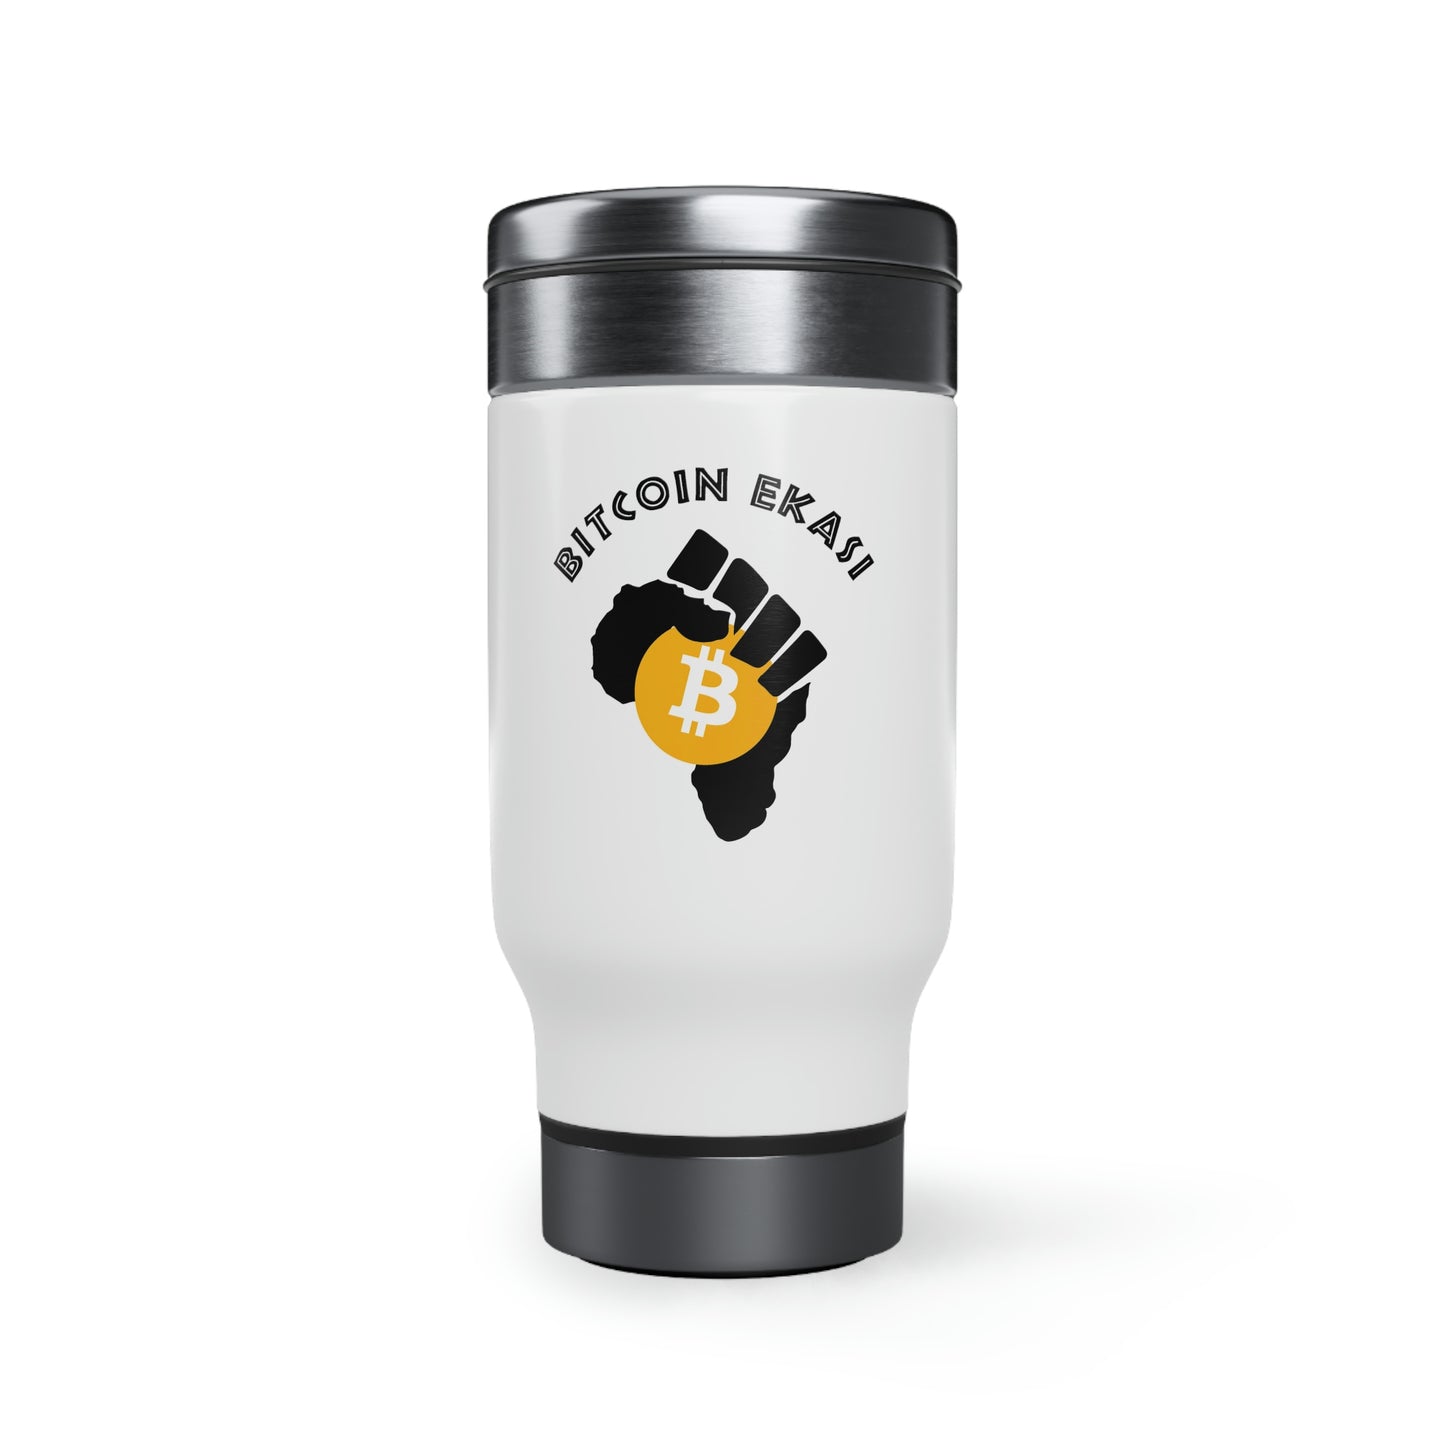 Bitcoin Ekasi Stainless Steel Travel Mug with Handle, 14oz